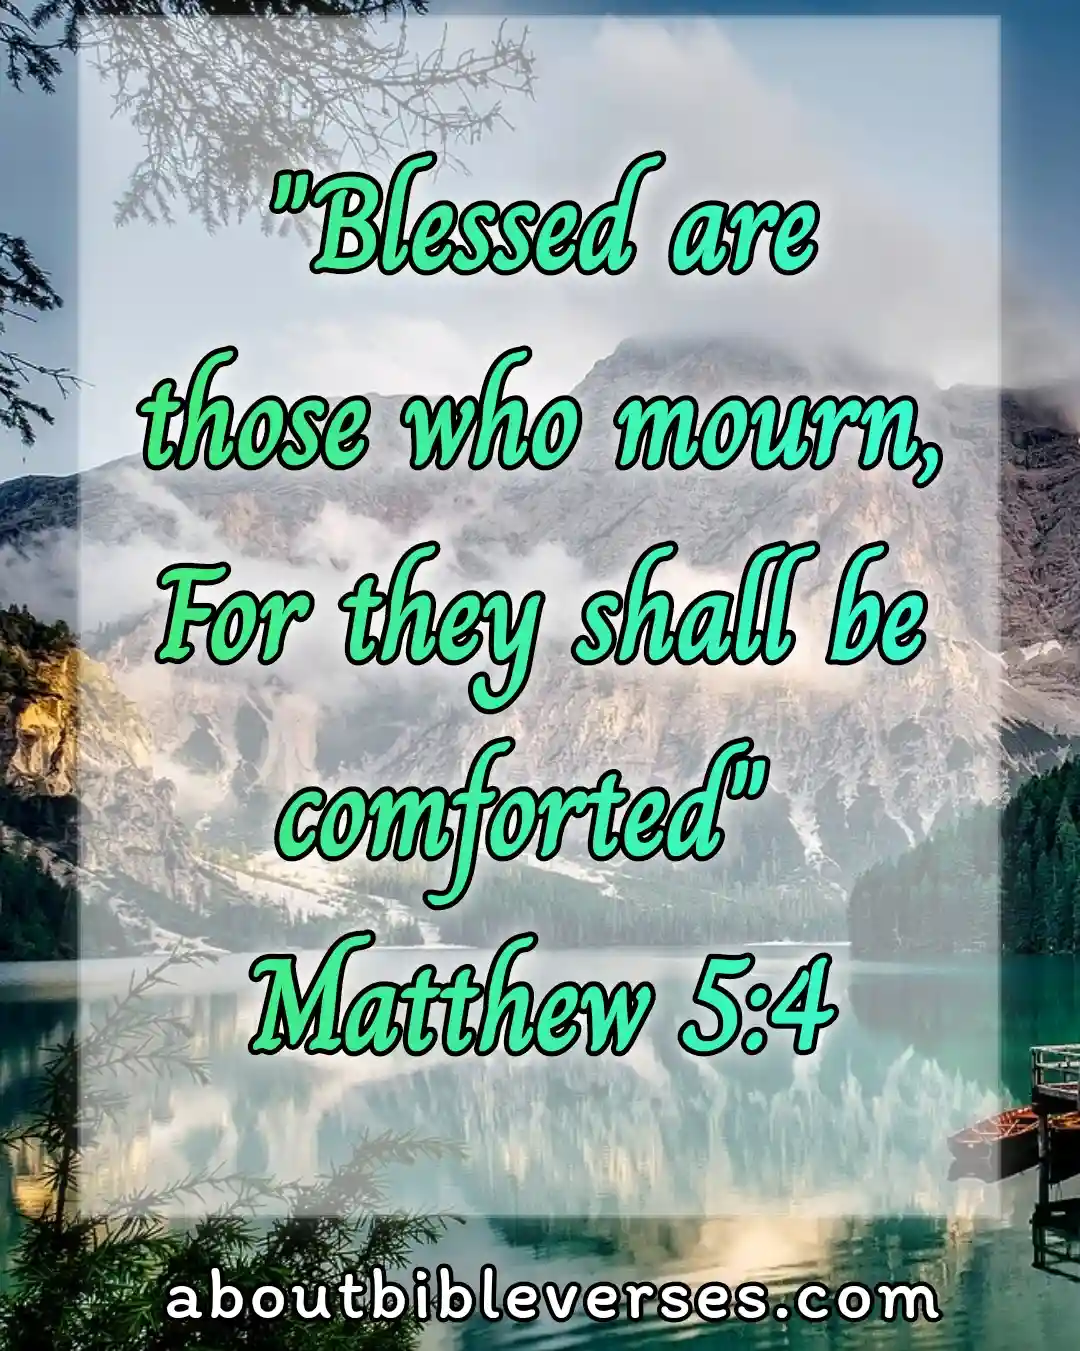 Monday Blessings Bible Verses (Matthew 5:4)